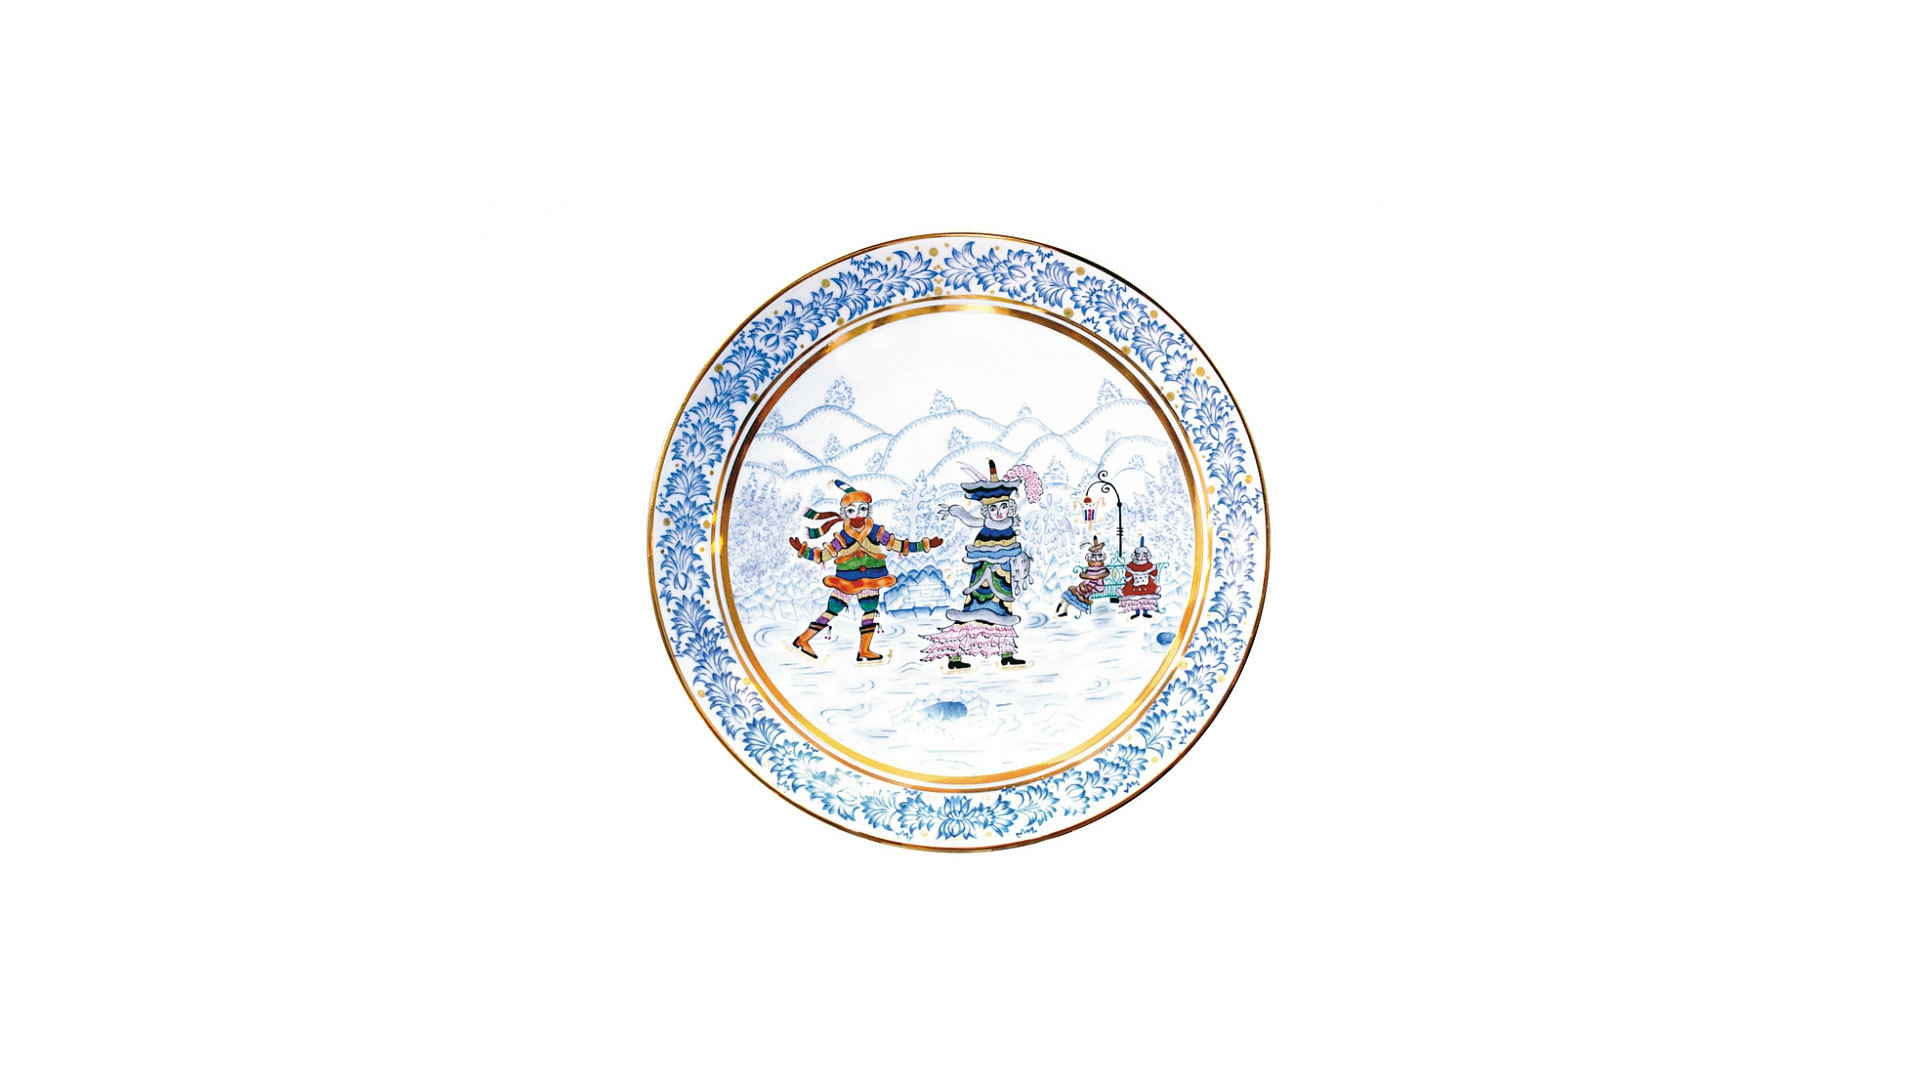 Тарелка декоративная ИФЗ Зимняя забава А Воробьевский 19,5 см, фарфор твердый